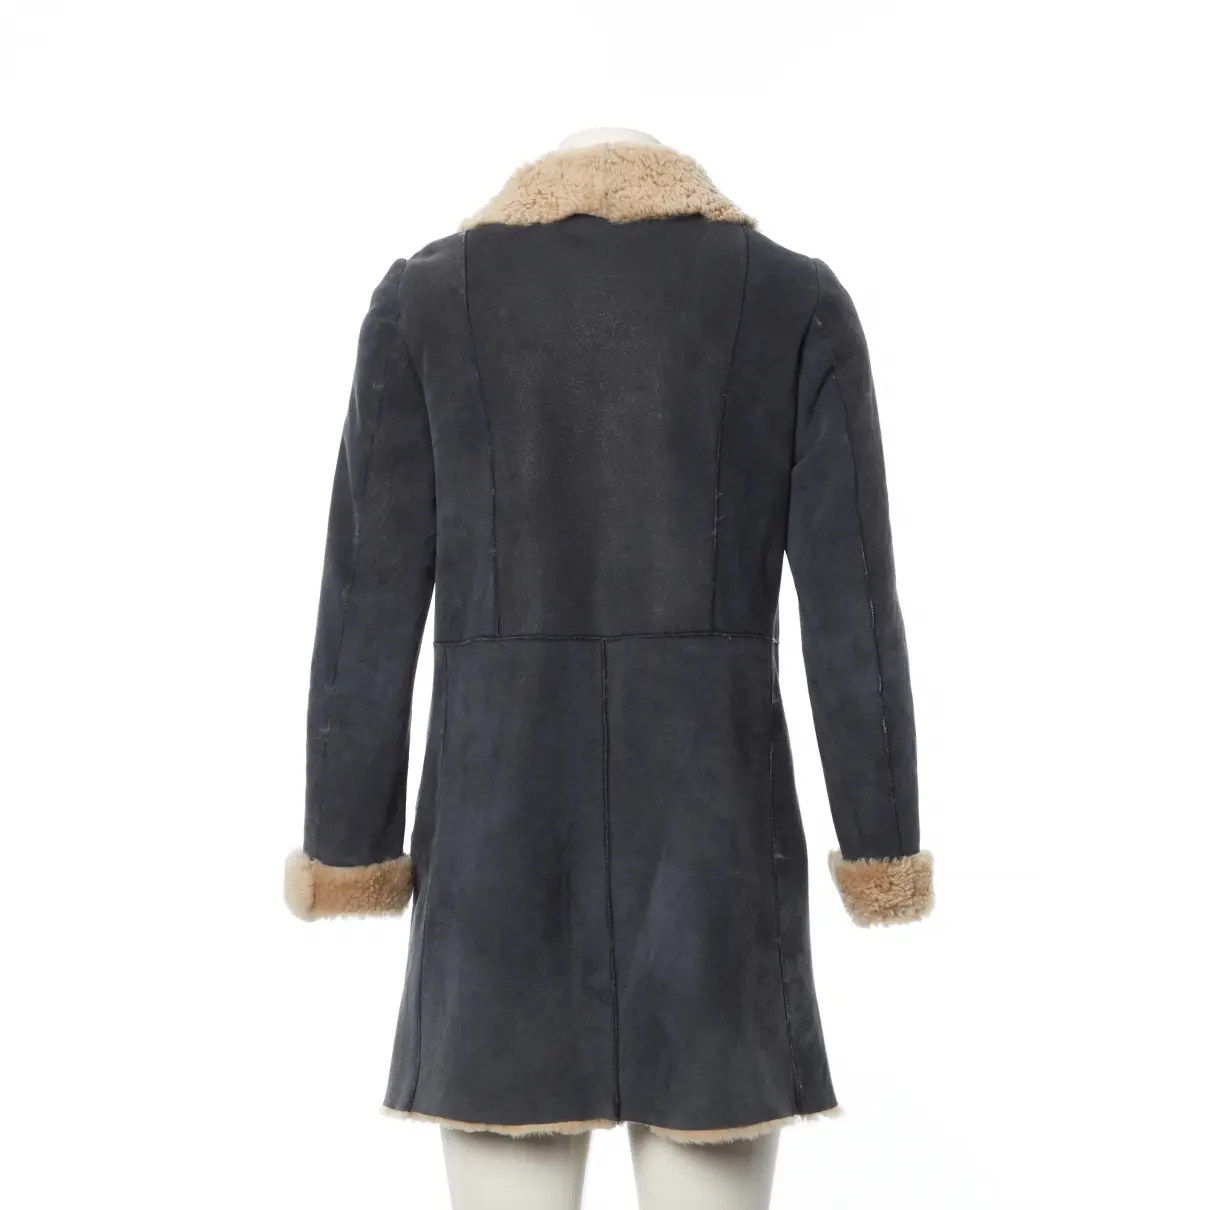 Buy Ba&sh Leather coat online